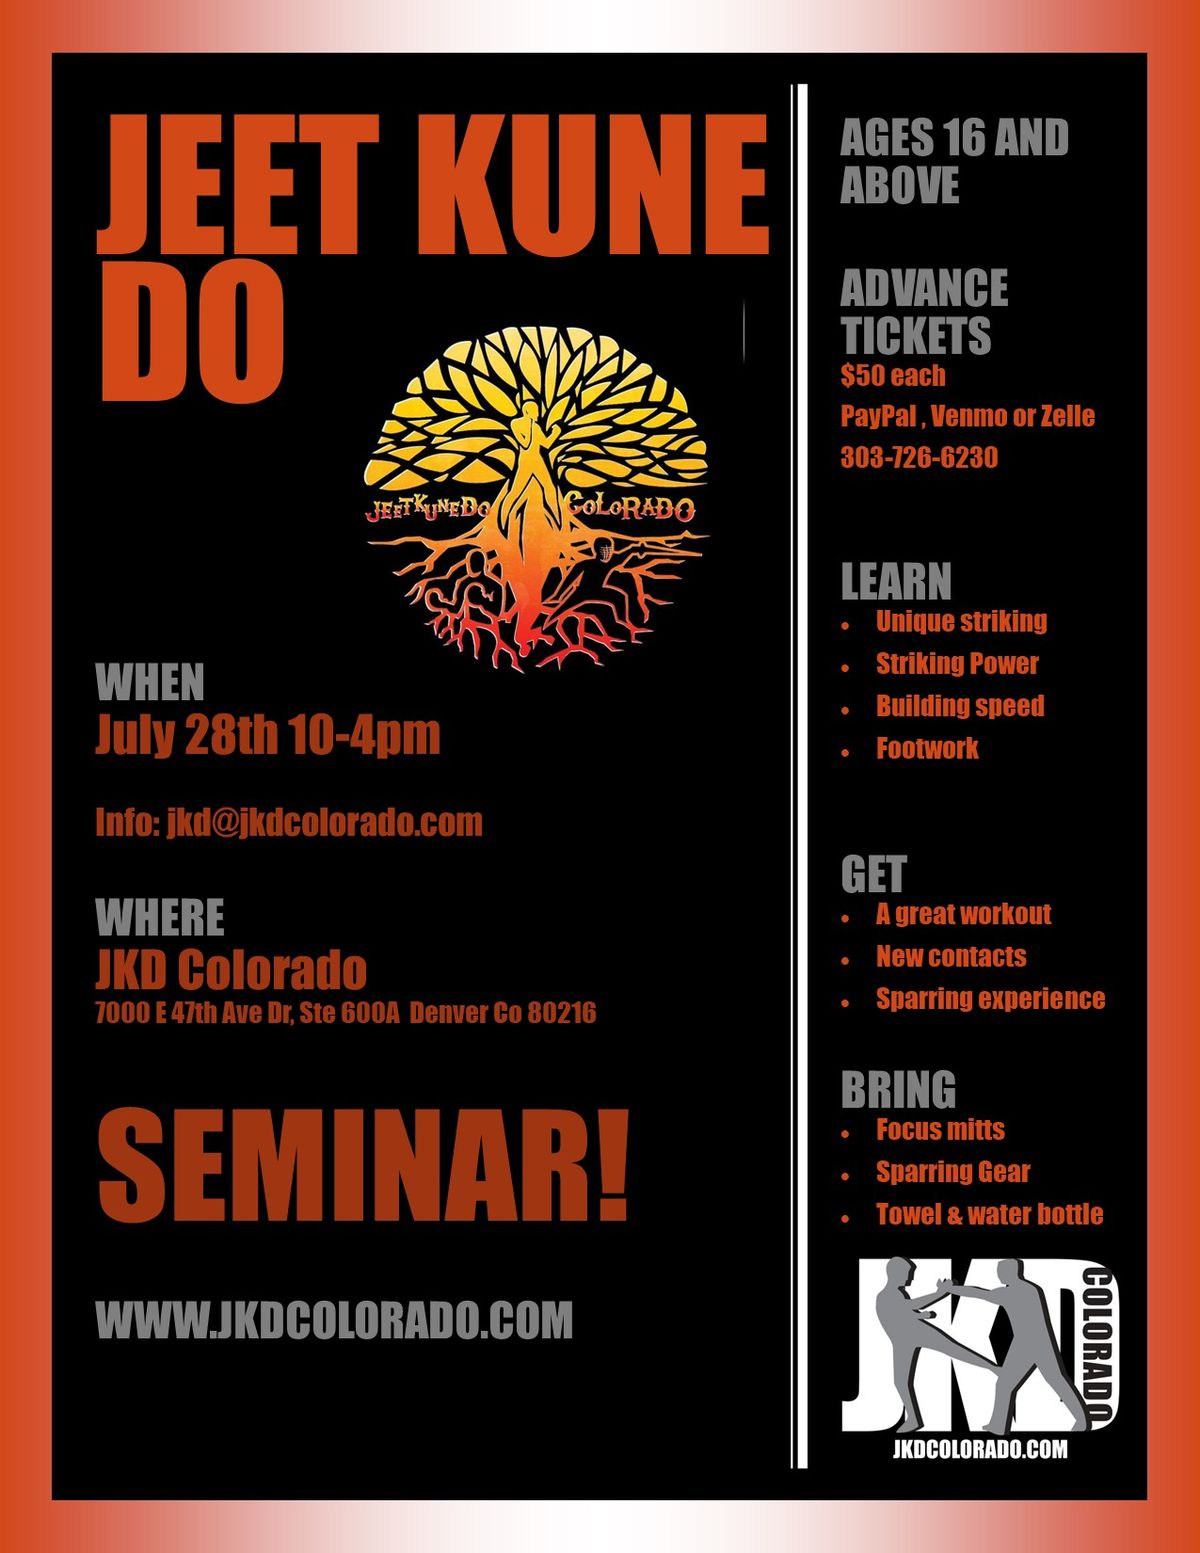 JKD Colorado's mid summer Seminar